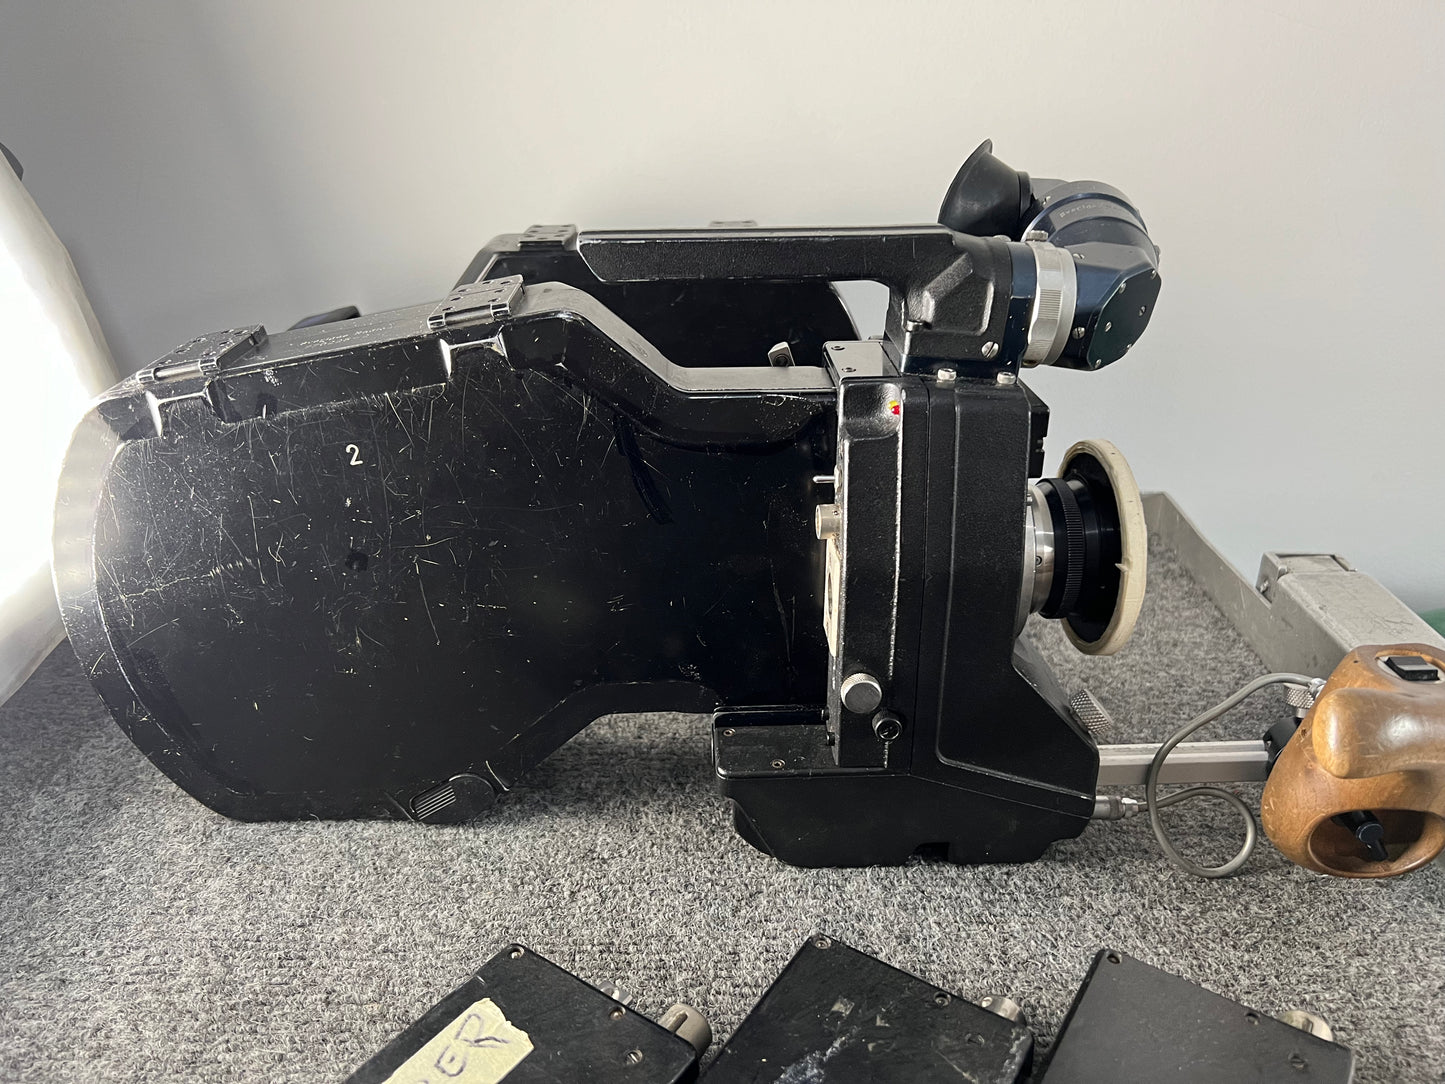 Aaton LTR 54 super 16mm movie camera